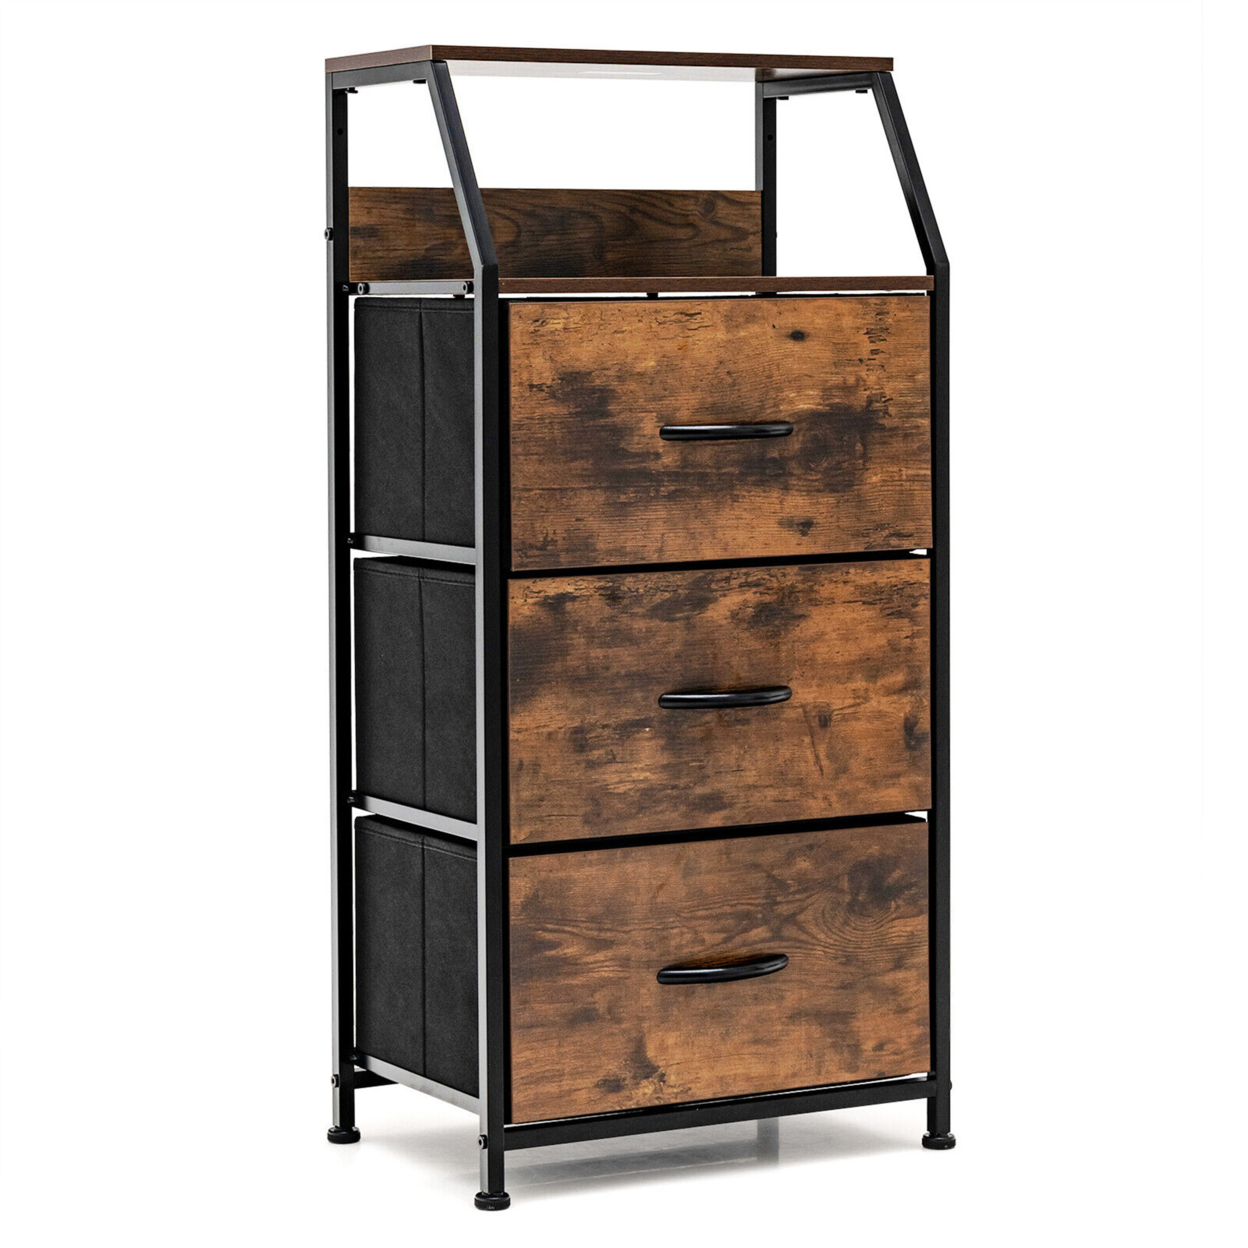 3 Drawer Dresser W/ Wood Top Sturdy Steel Frame Storage Organizer Dresser